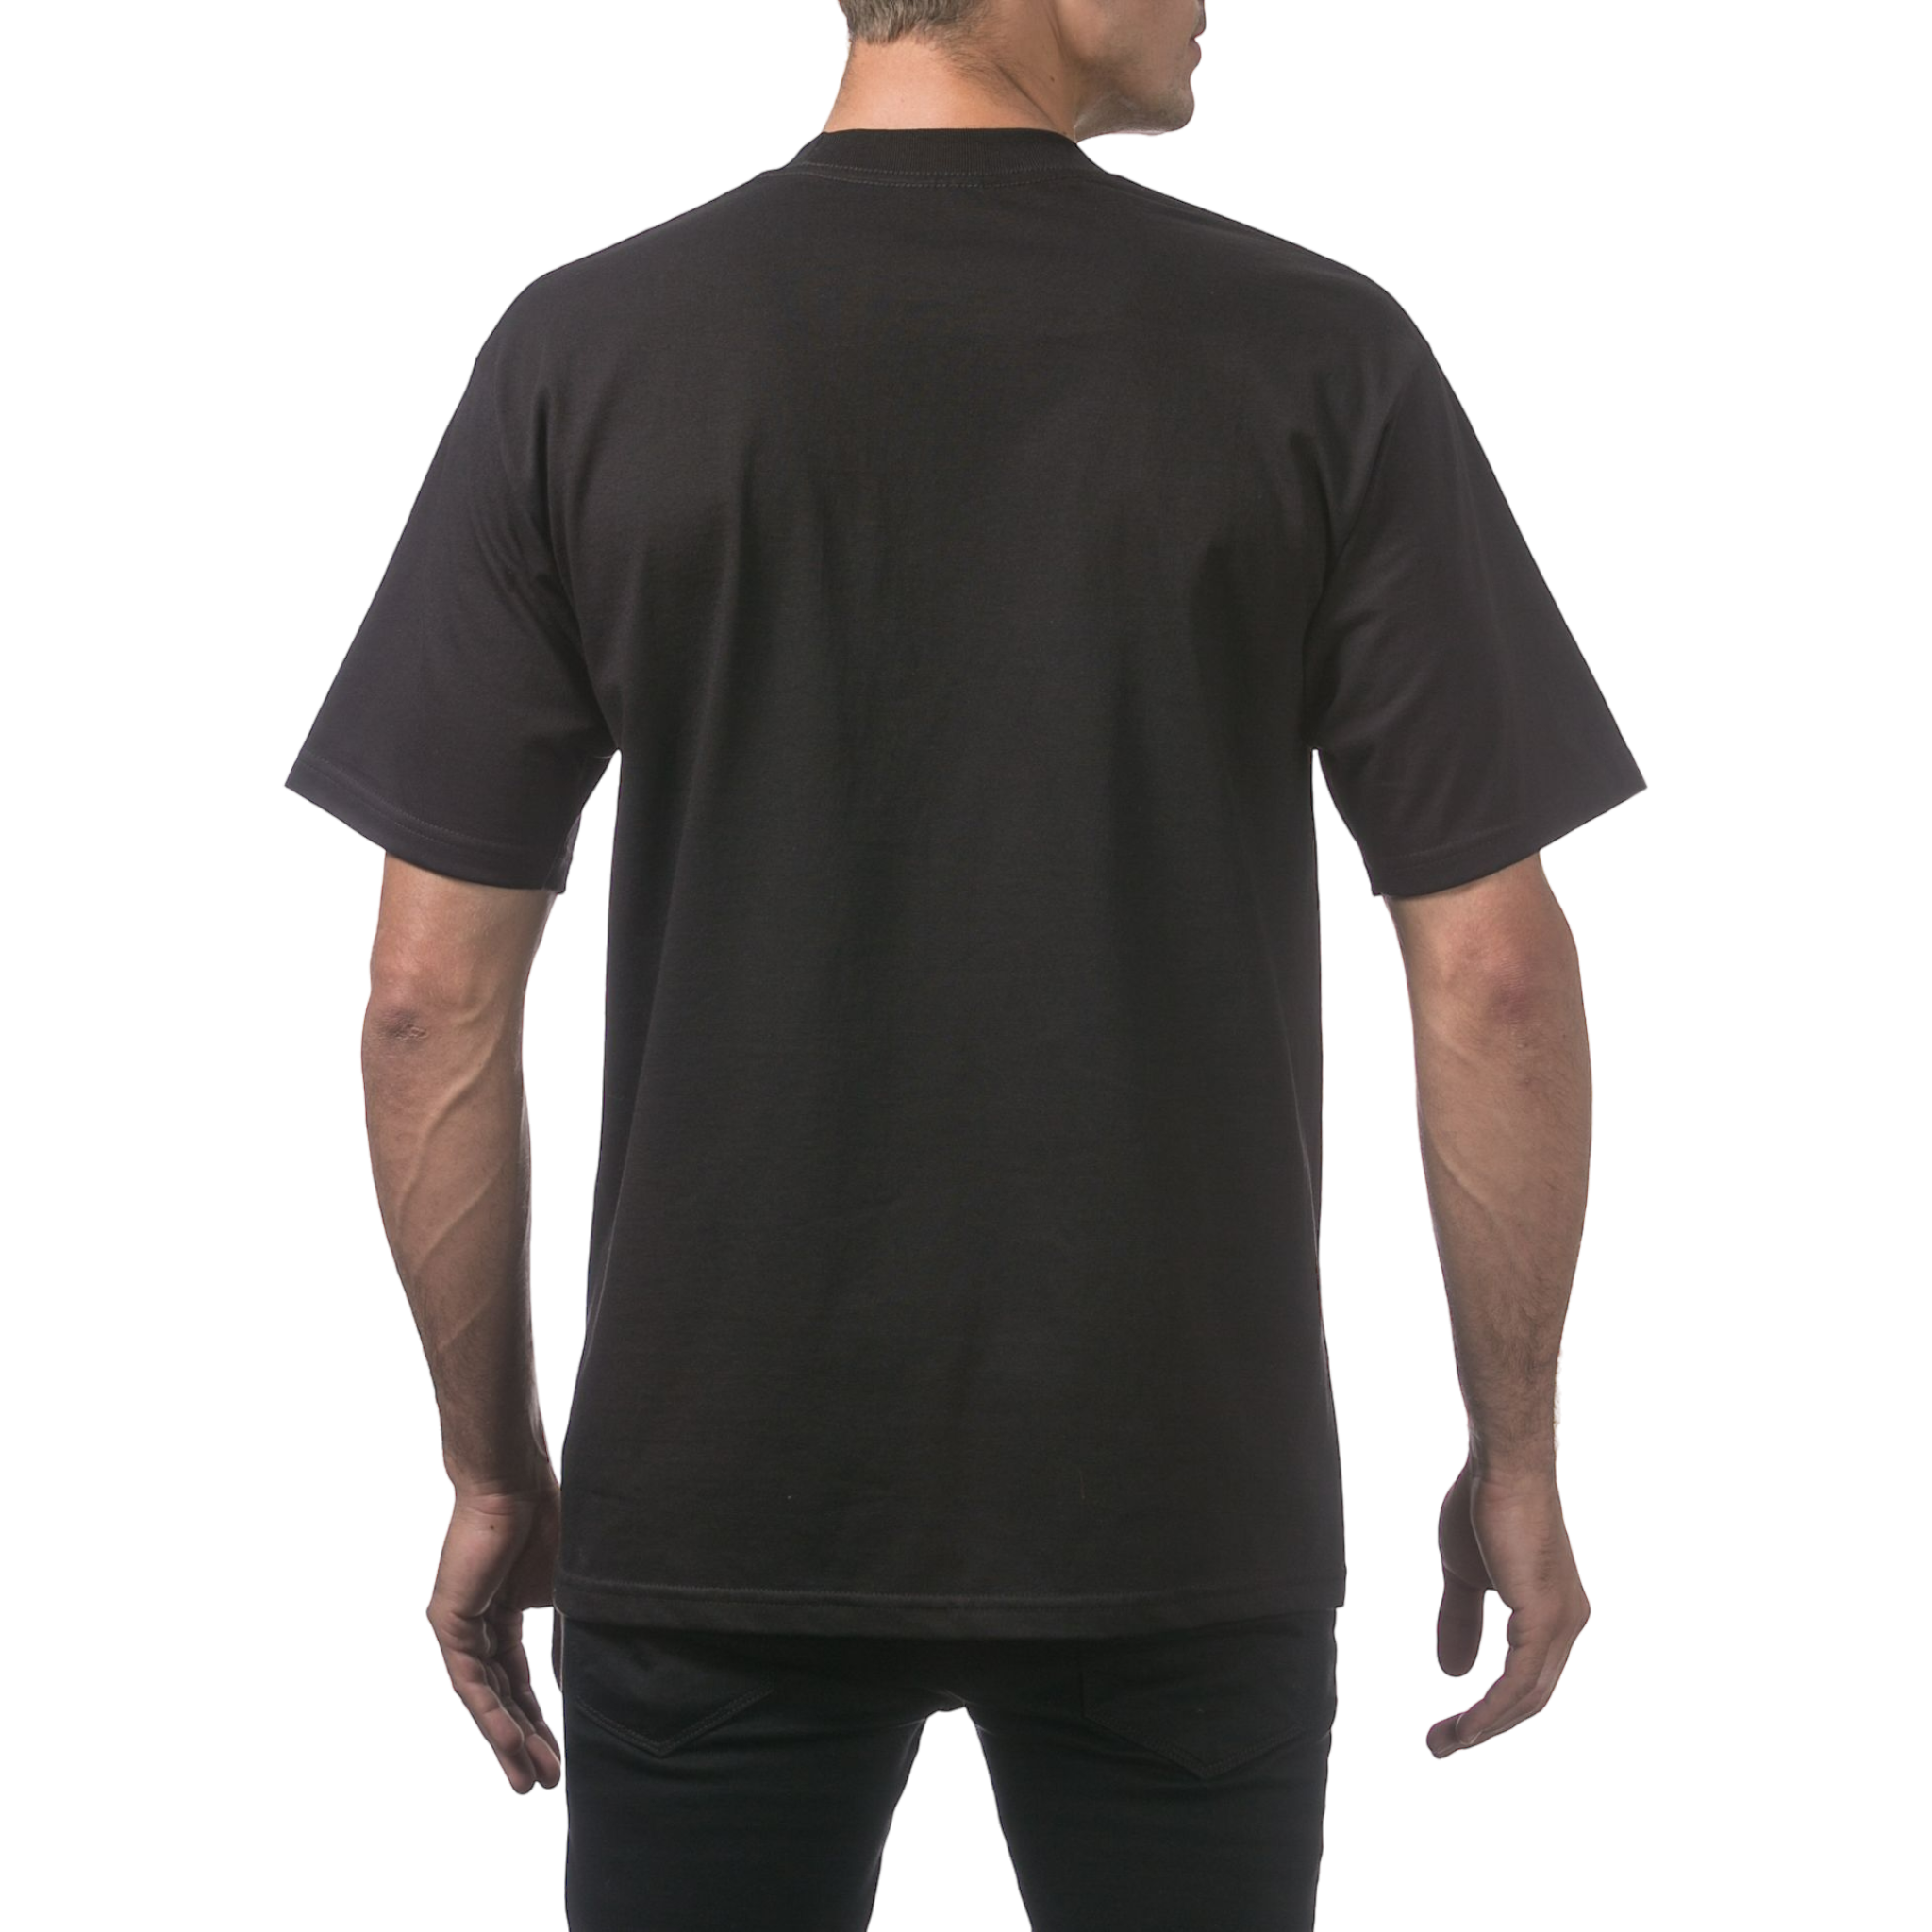 Pro Club Men's Heavyweight Short Sleeve Tee T-Shirt - Black - X-Large - Pro-Distributing